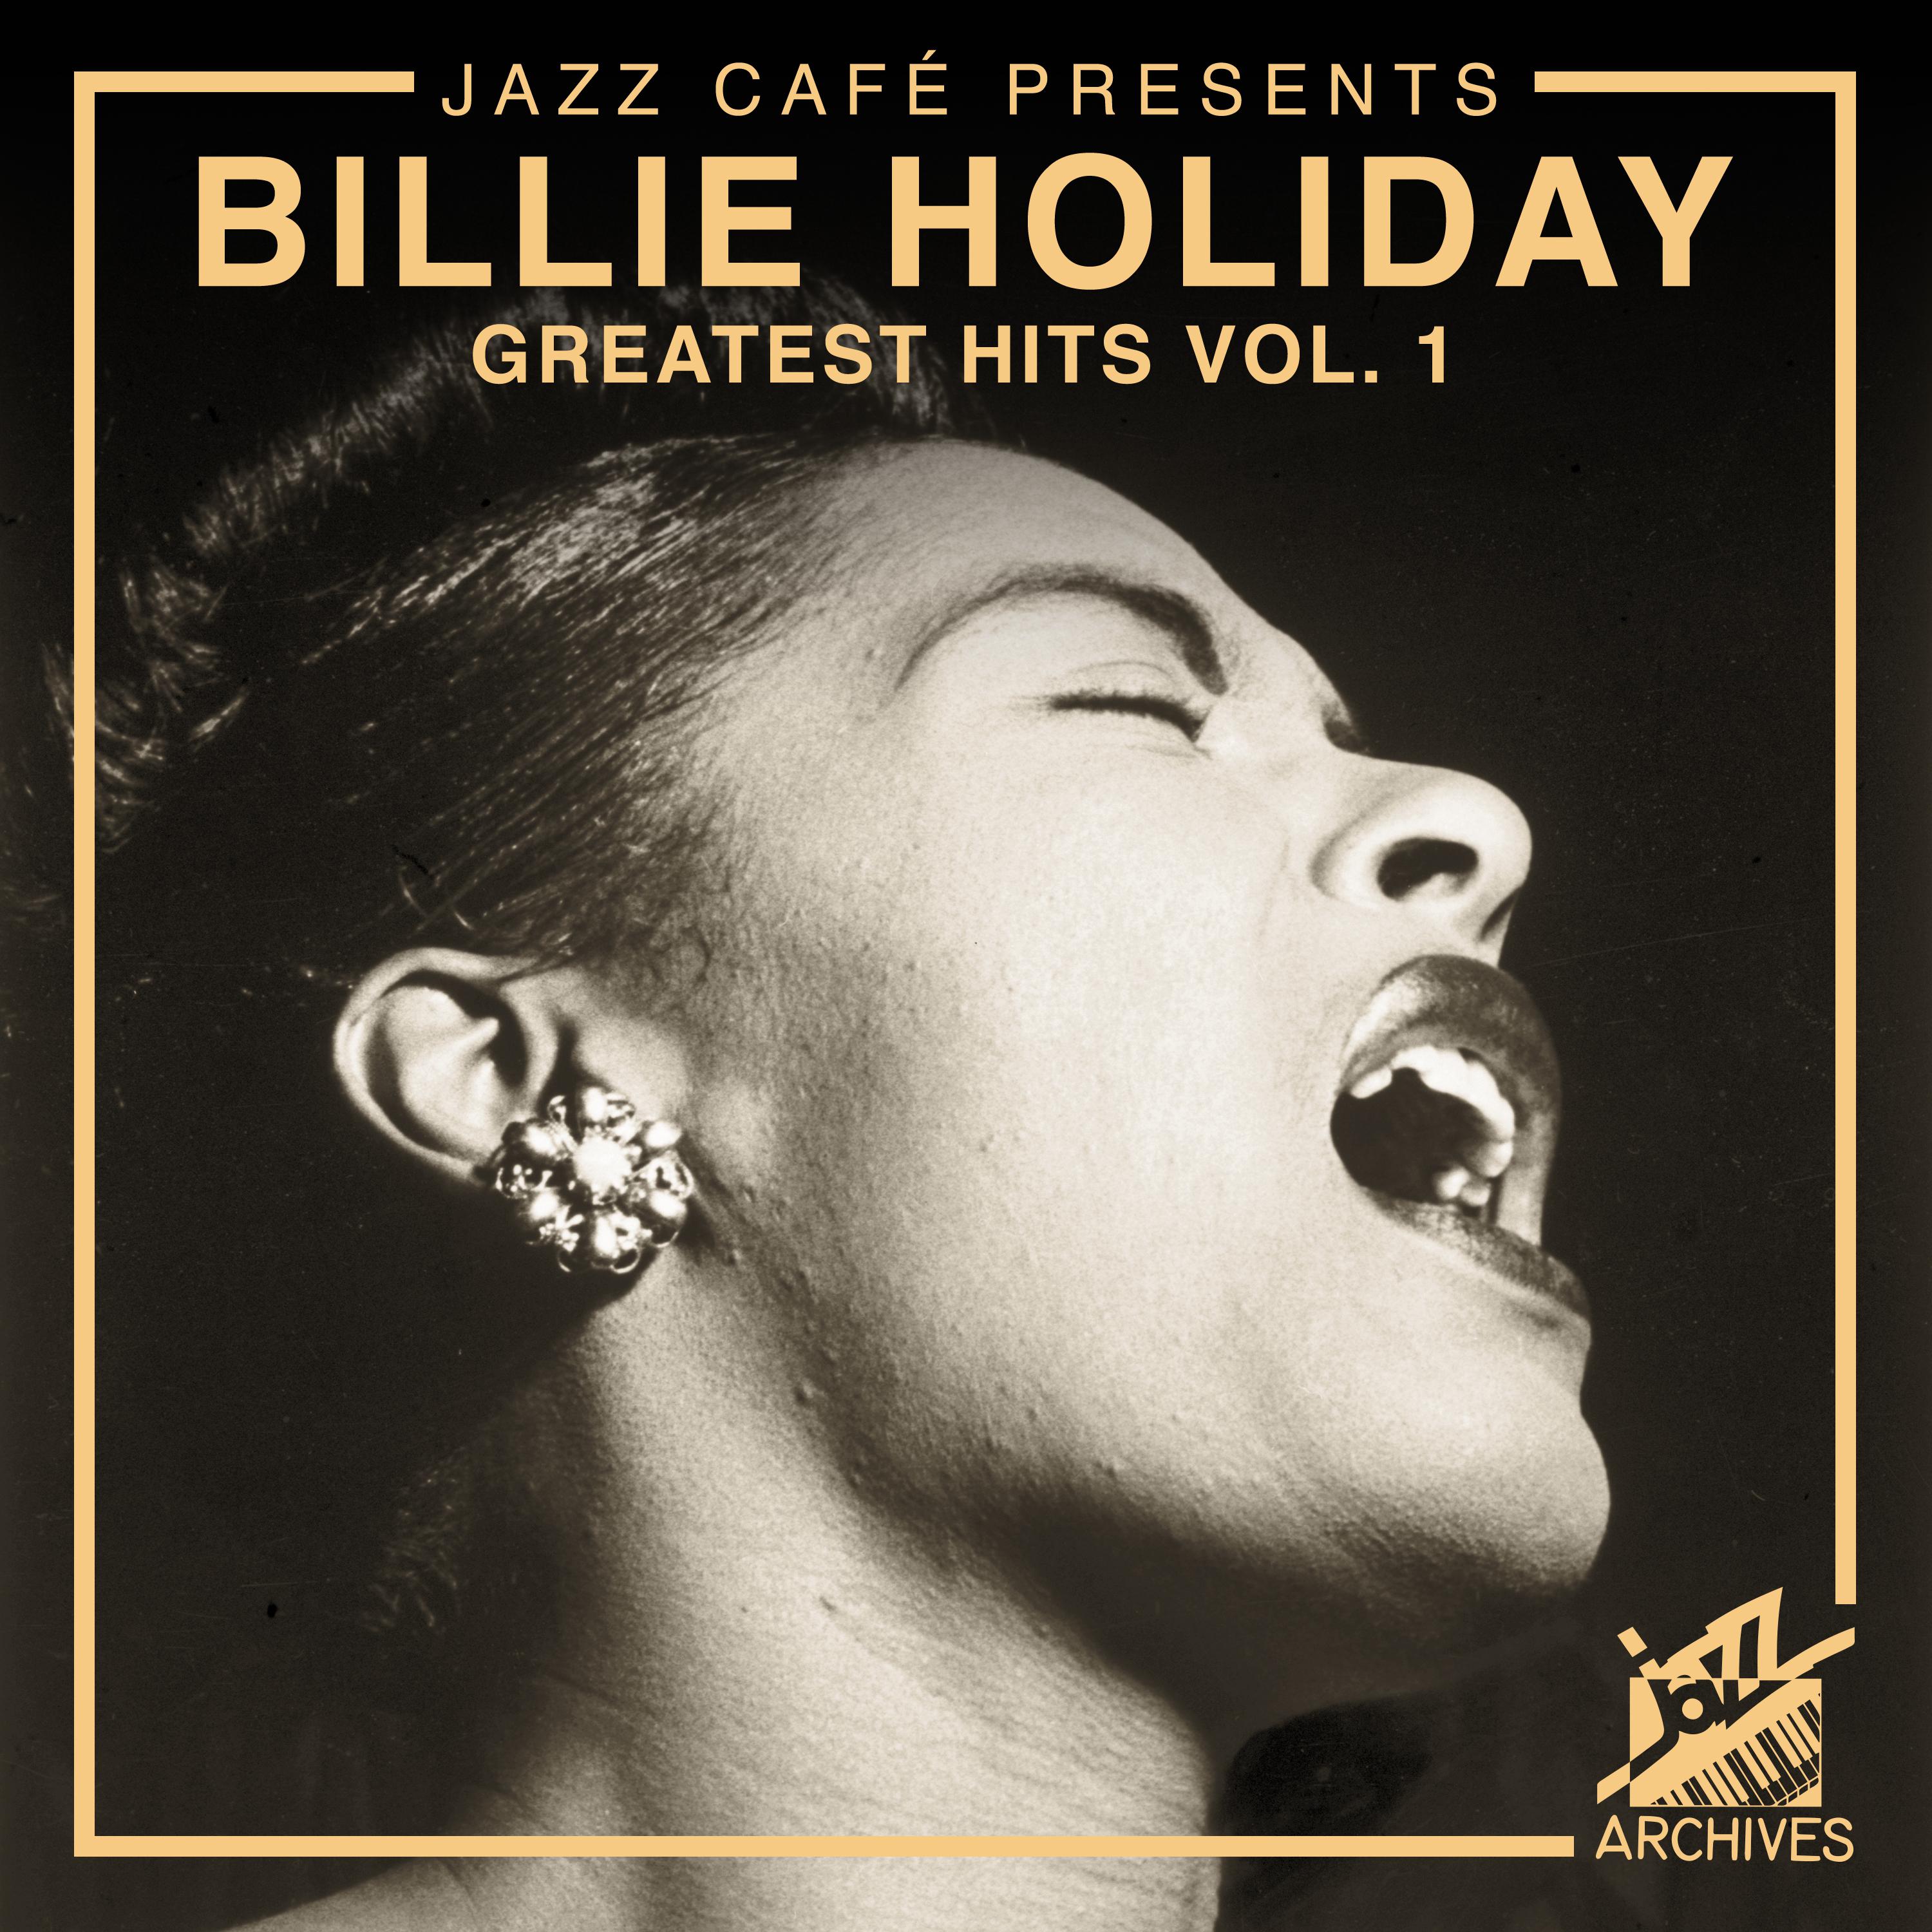 Jazz Cafe Presents: Billie Holiday Greatest Hits Vol. 1